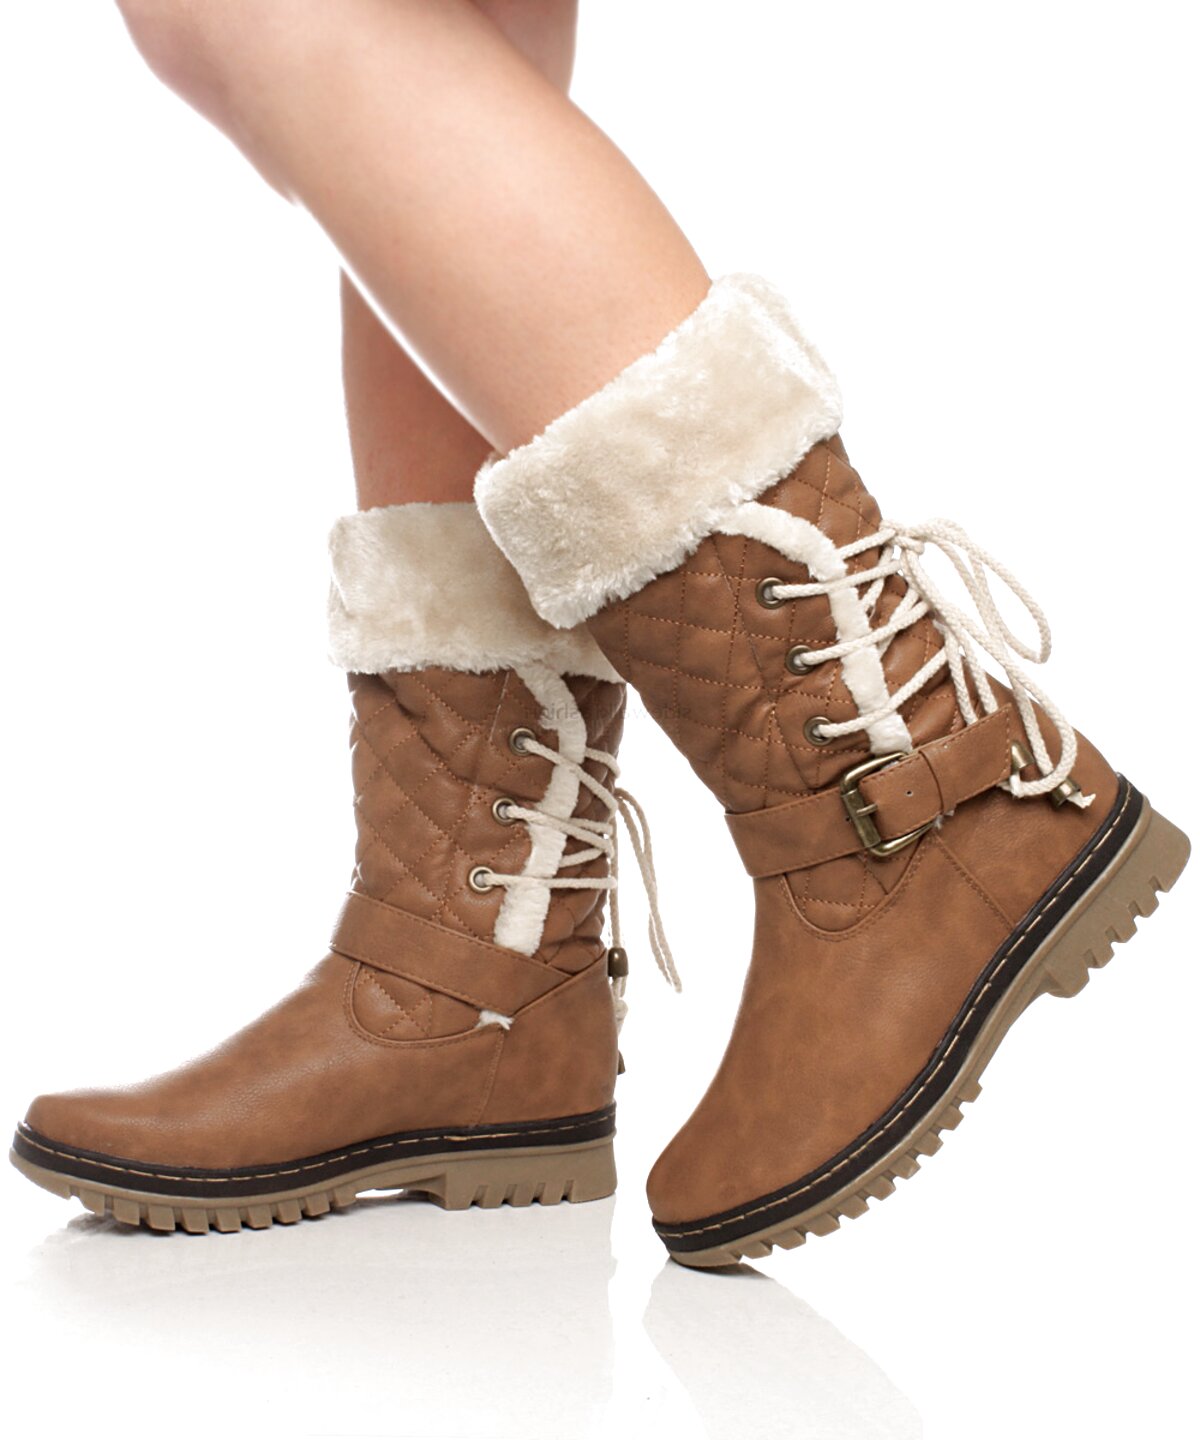 Ladies winter boots sale uk